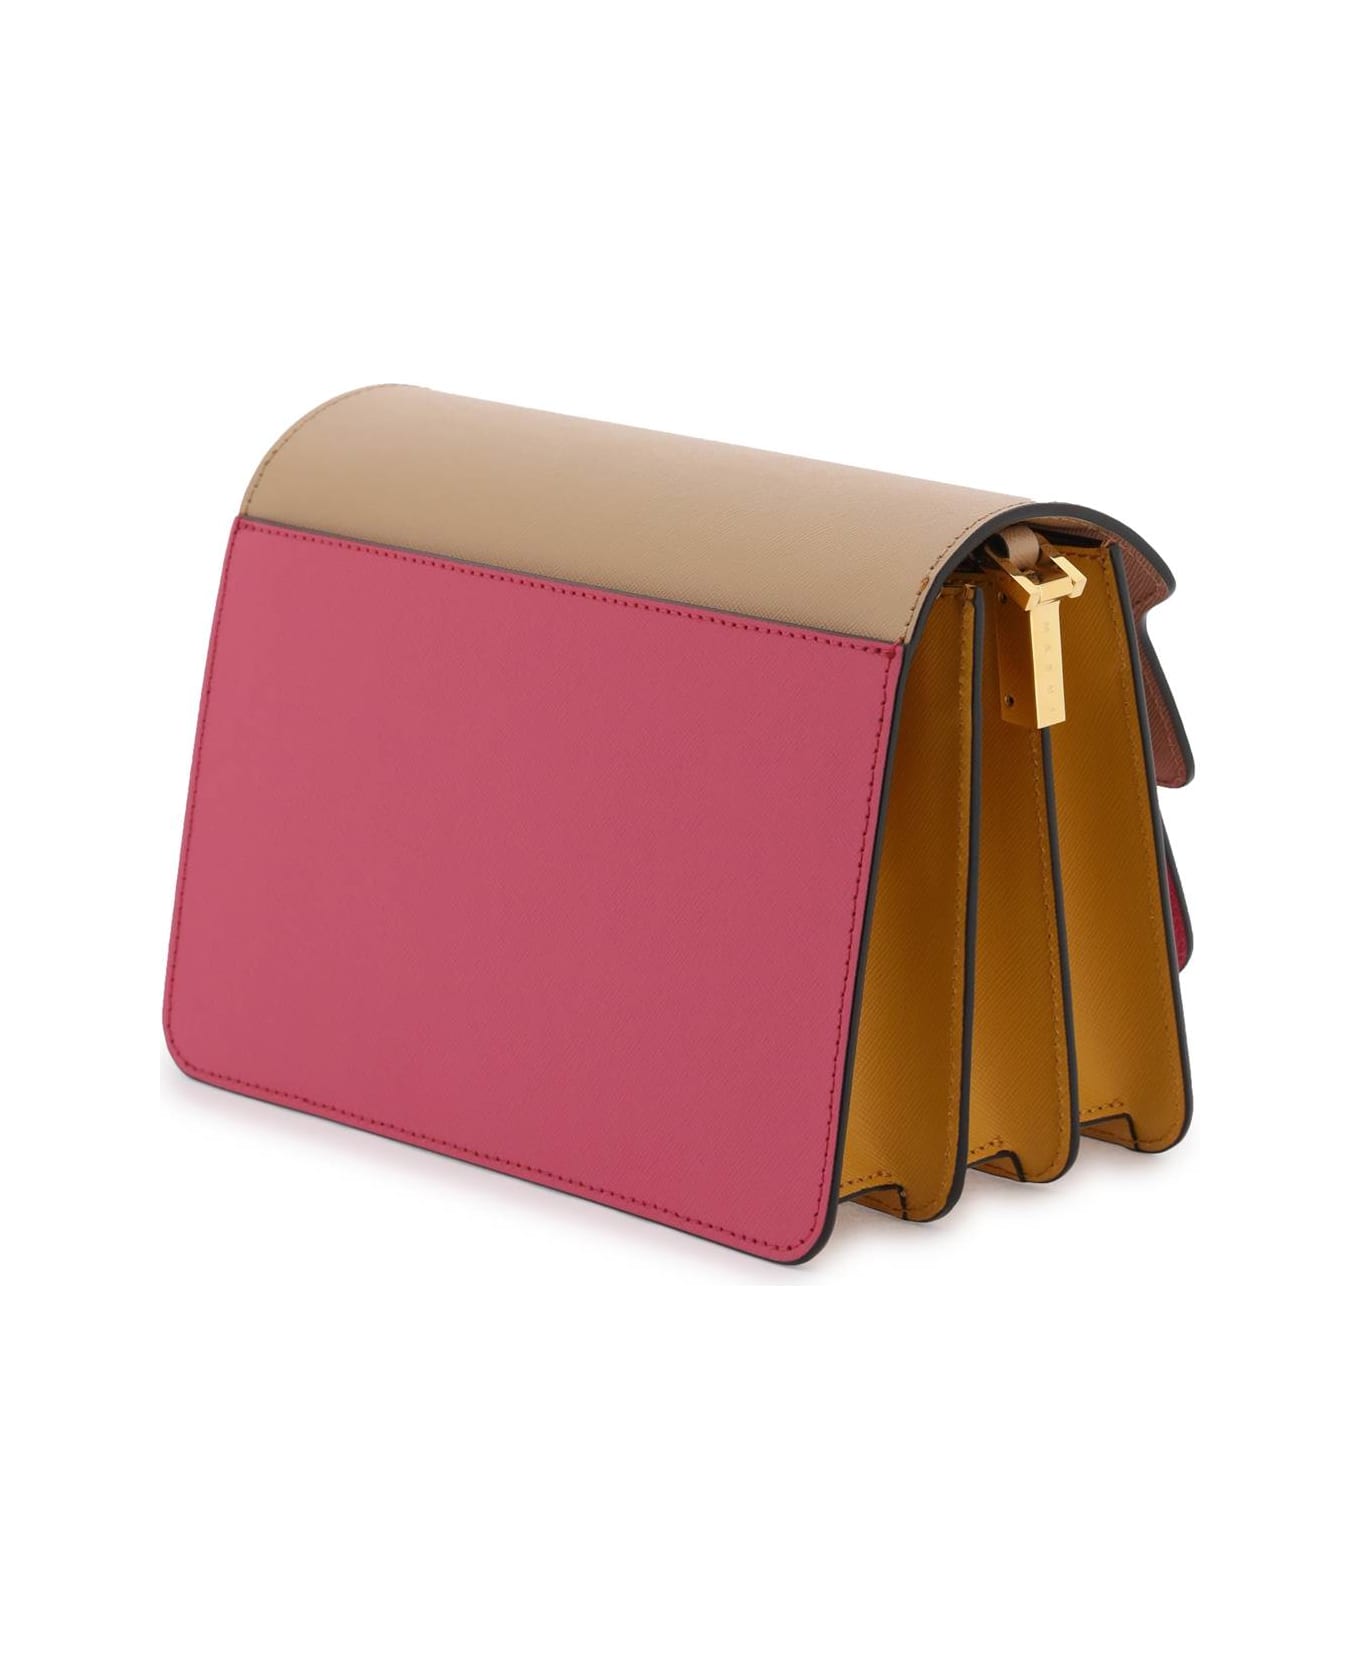 Marni Tricolor Leather Medium Trunk Bag - Pink